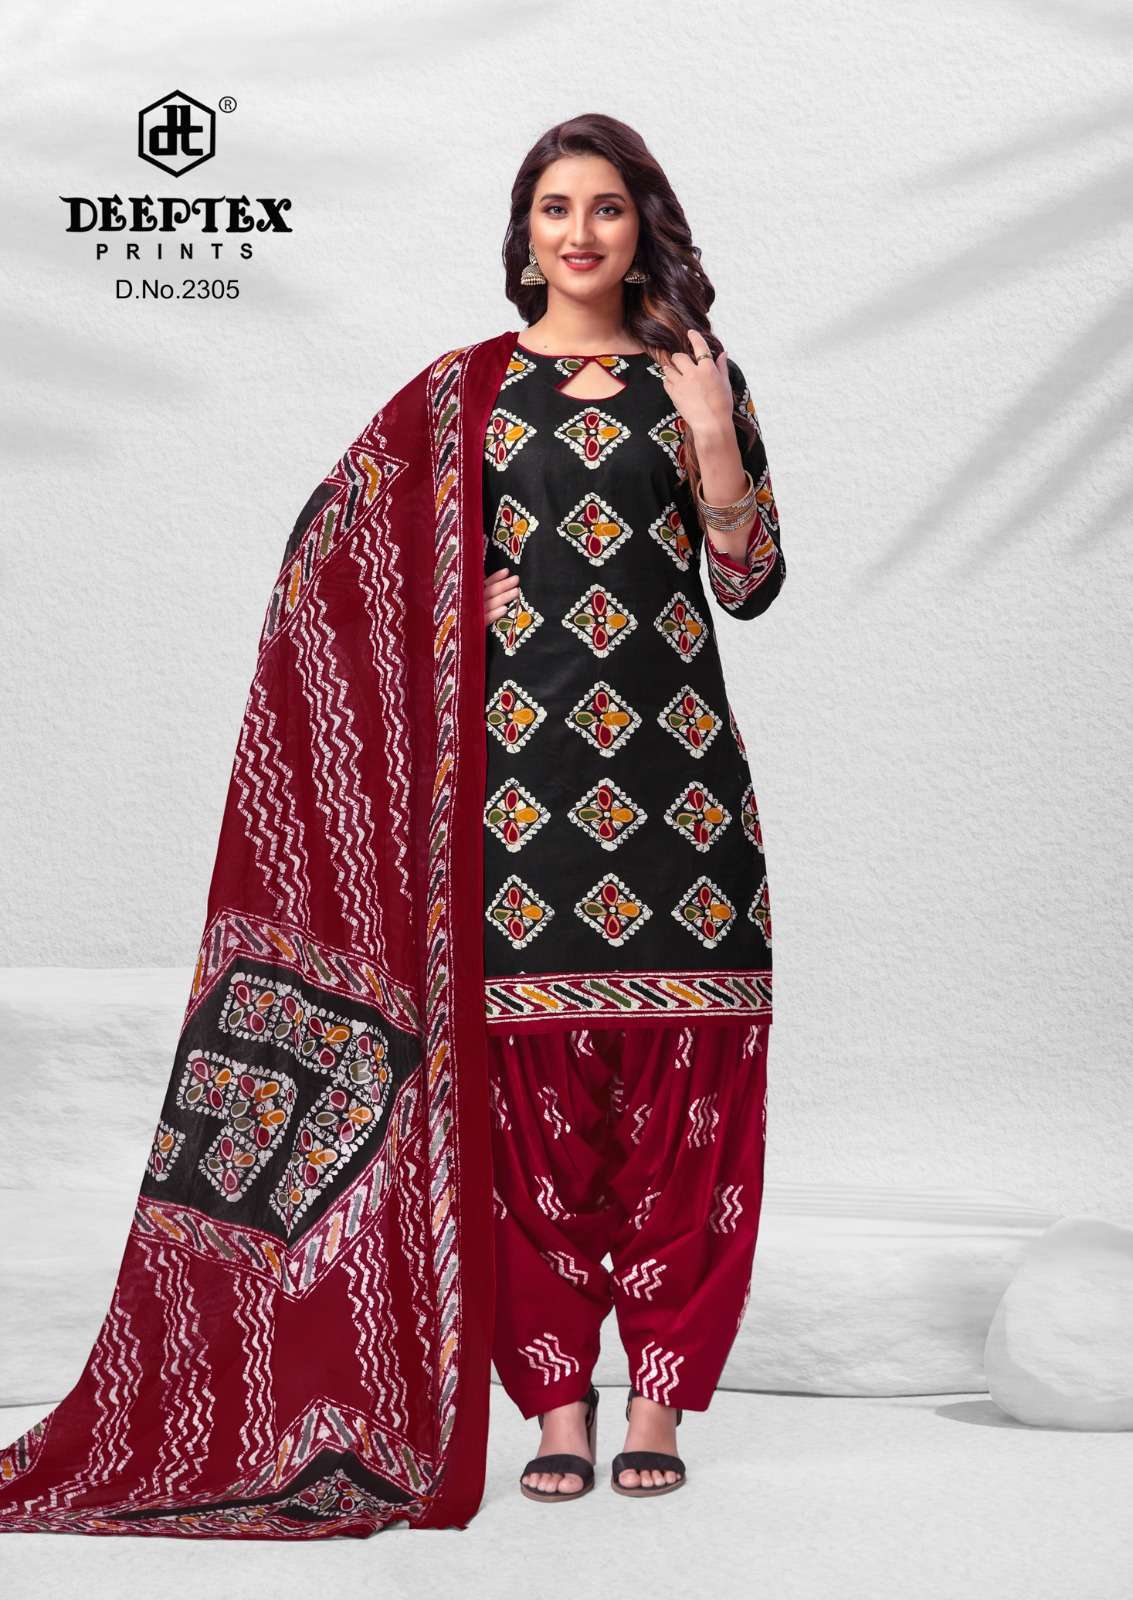 Buy Bombay Buta Brown & Blue Star Flower Design Hand Batik Pure Cotton Dress  Material Set at Amazon.in